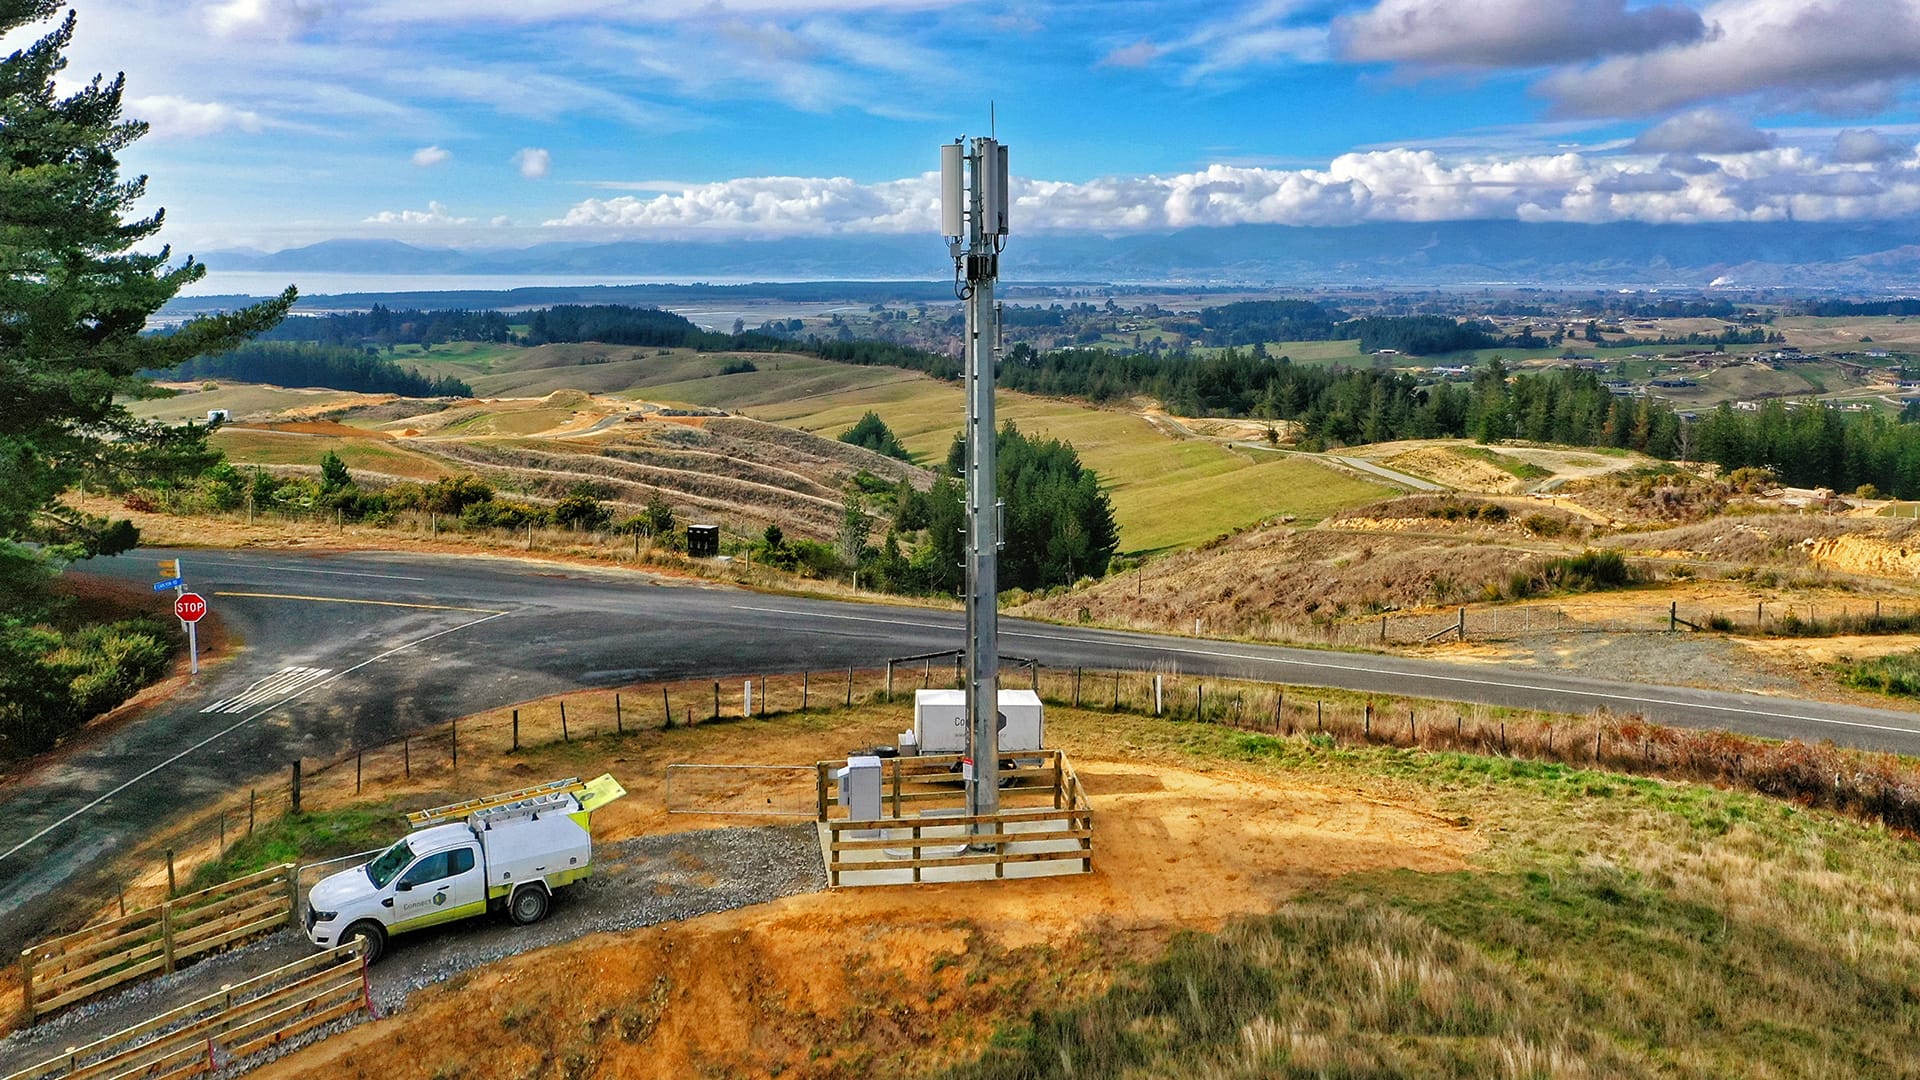 Rural wireless tower. New Zealand. 